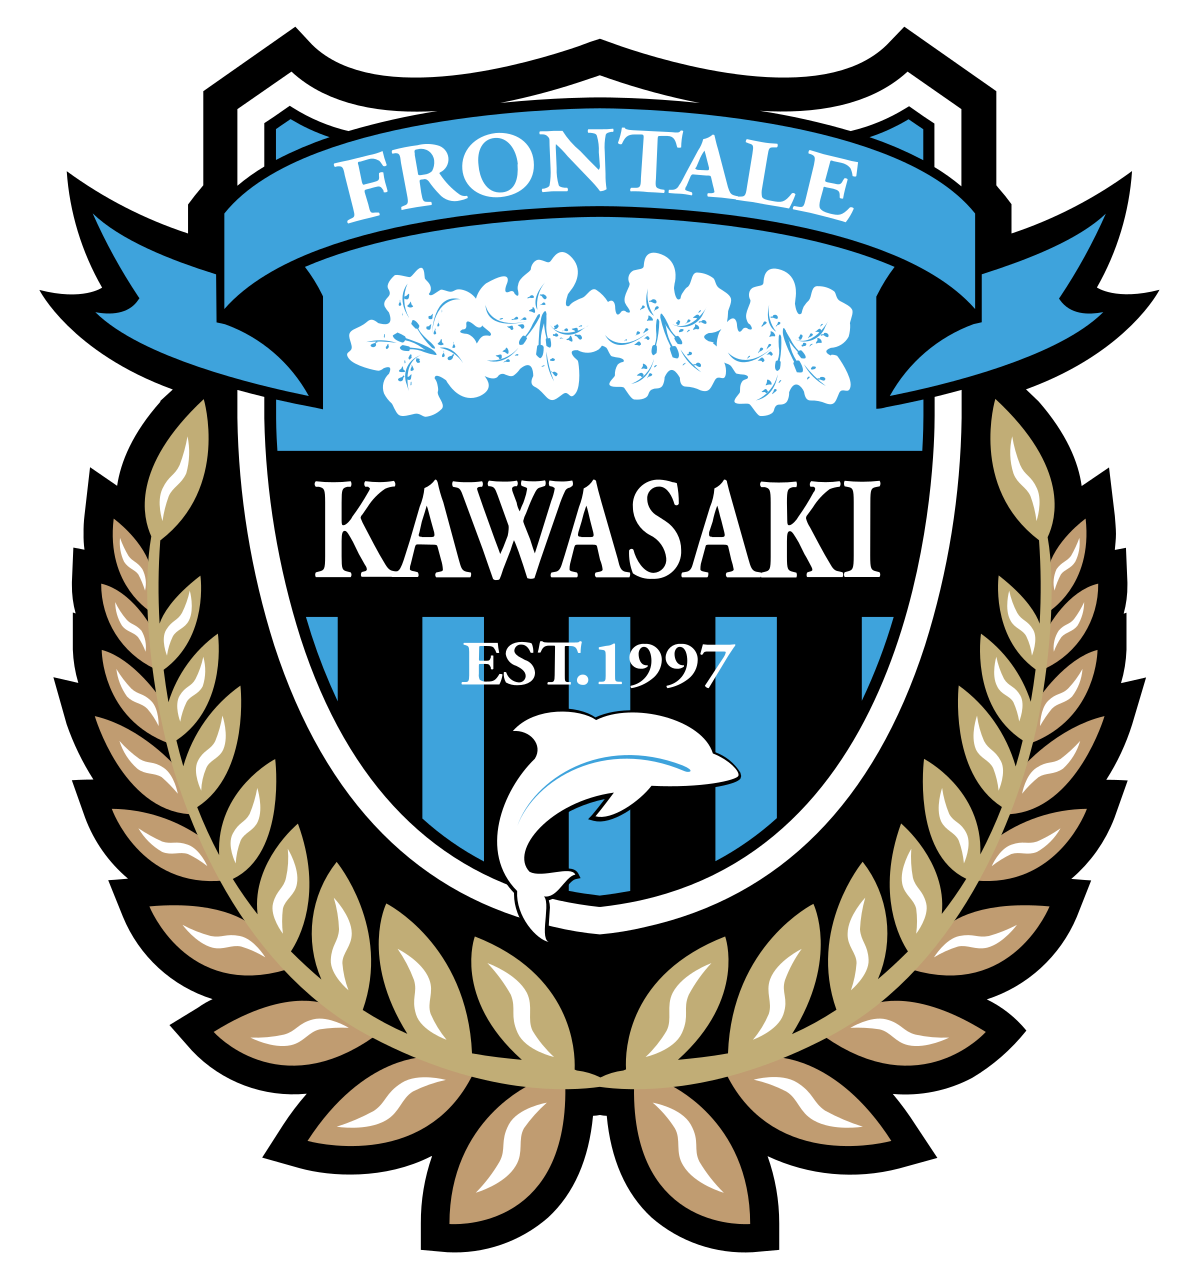 Kawasaki Frontale Wikipedia